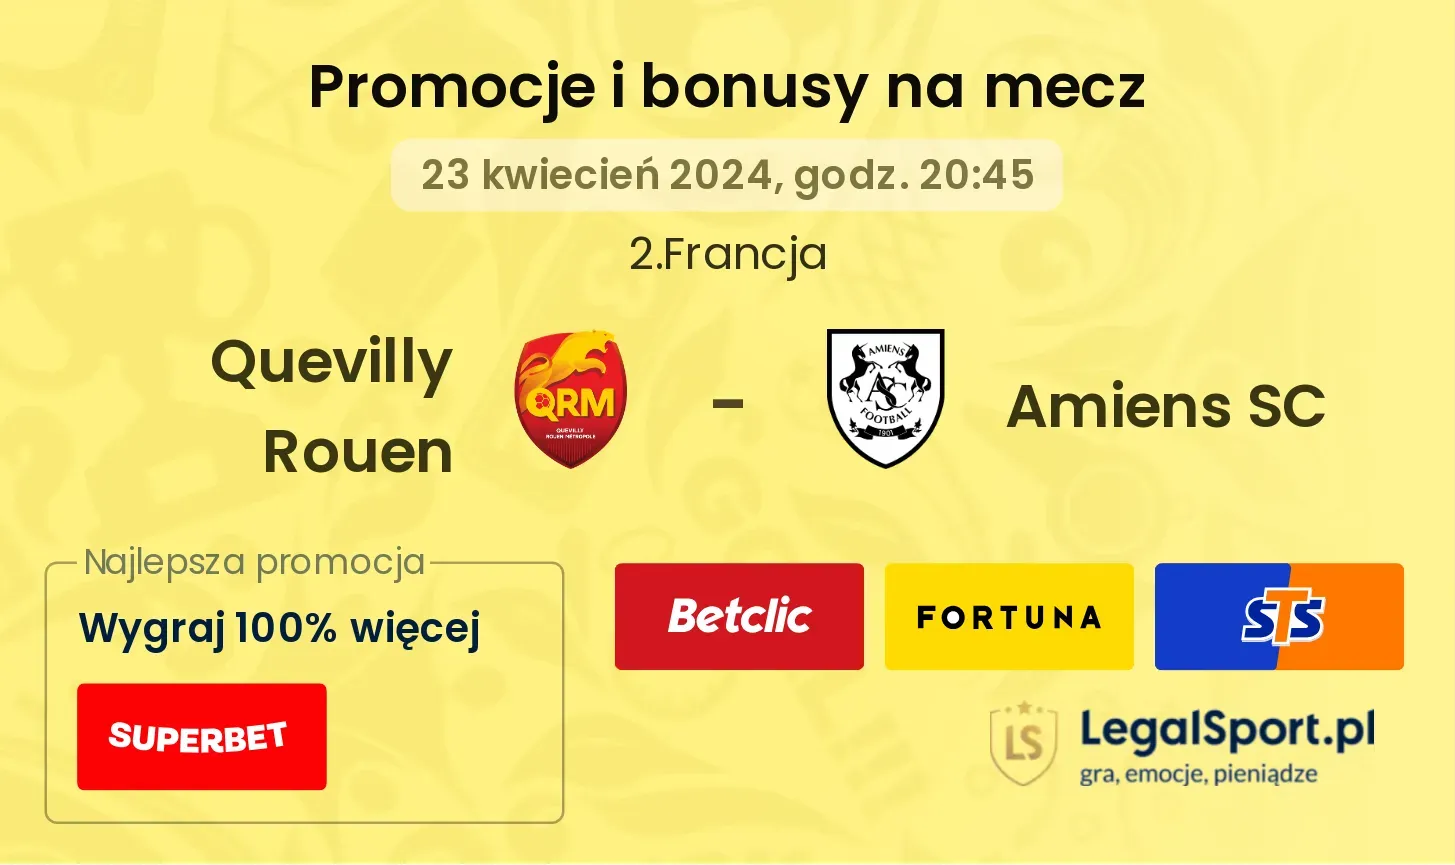 Quevilly Rouen - Amiens SC promocje bonusy na mecz